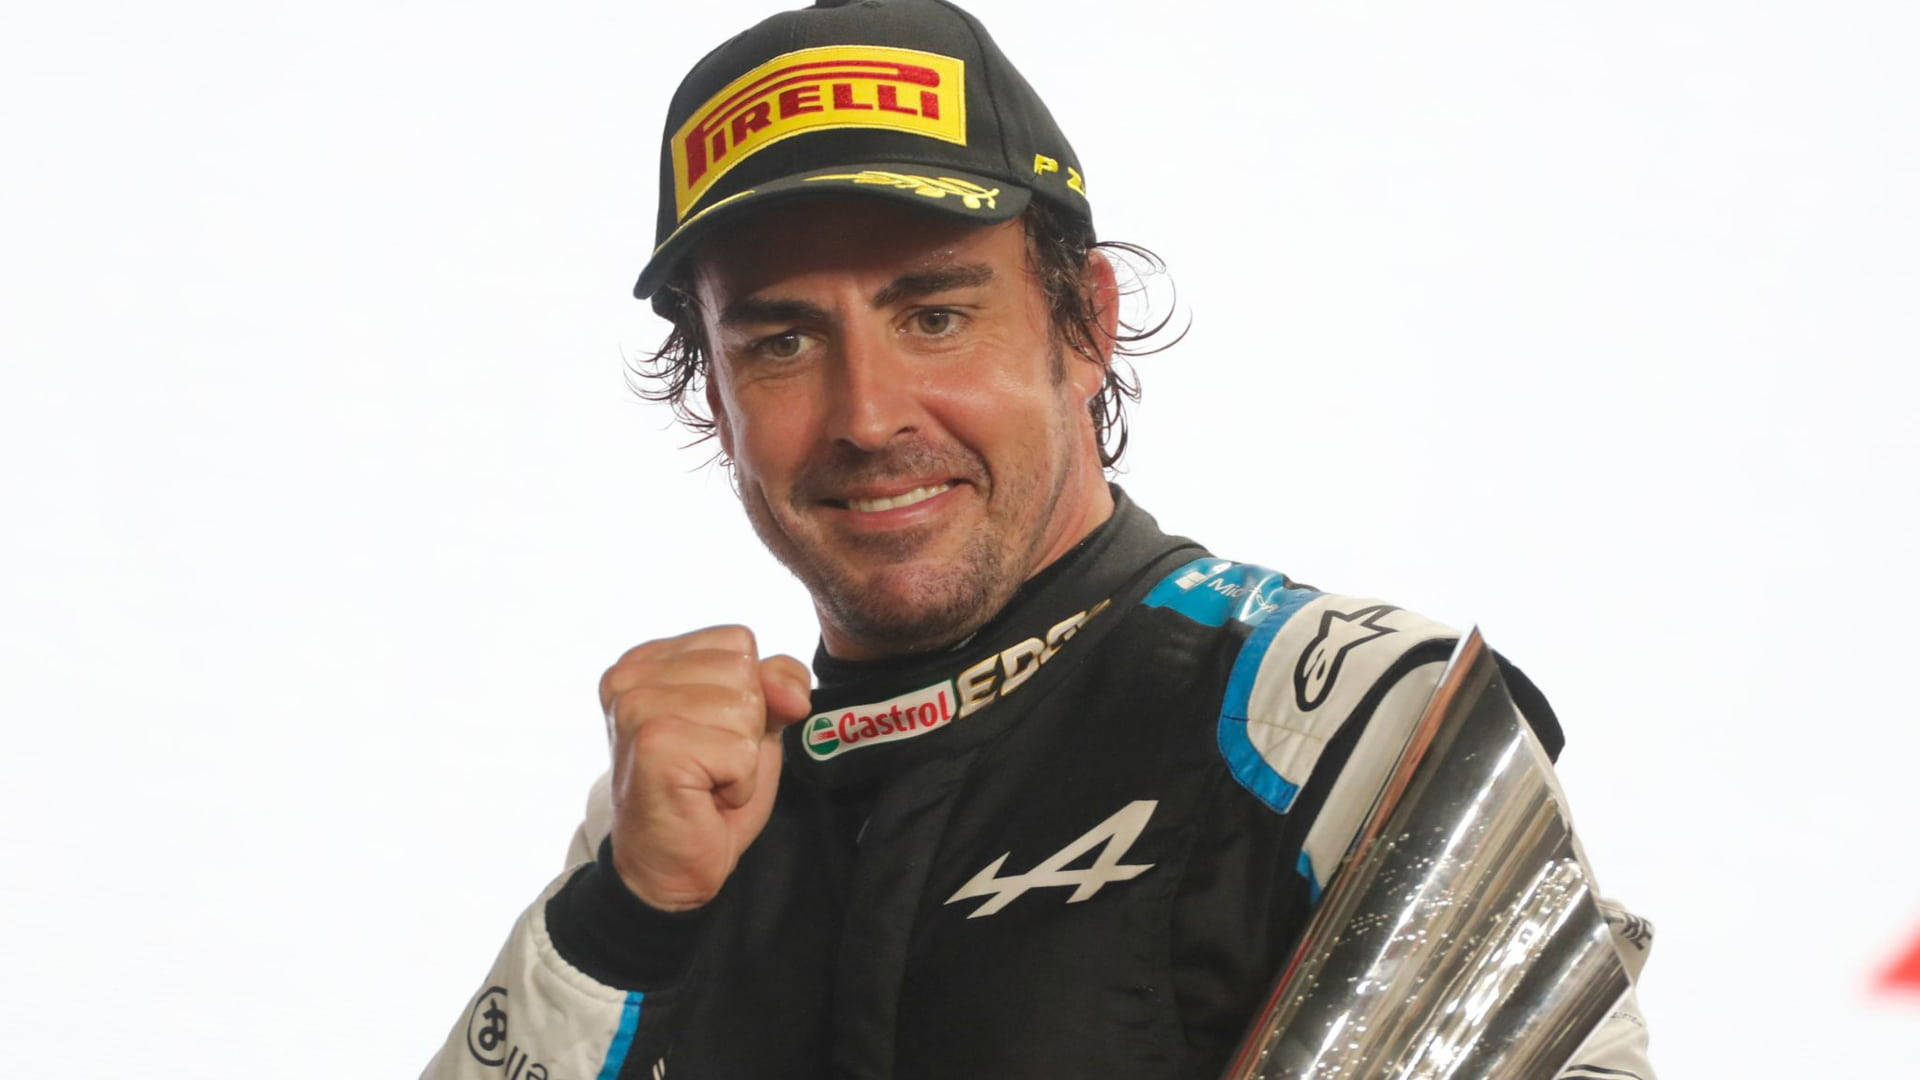 Fernando Alonso Celebrating Victory in Formula 1 Race Wallpaper